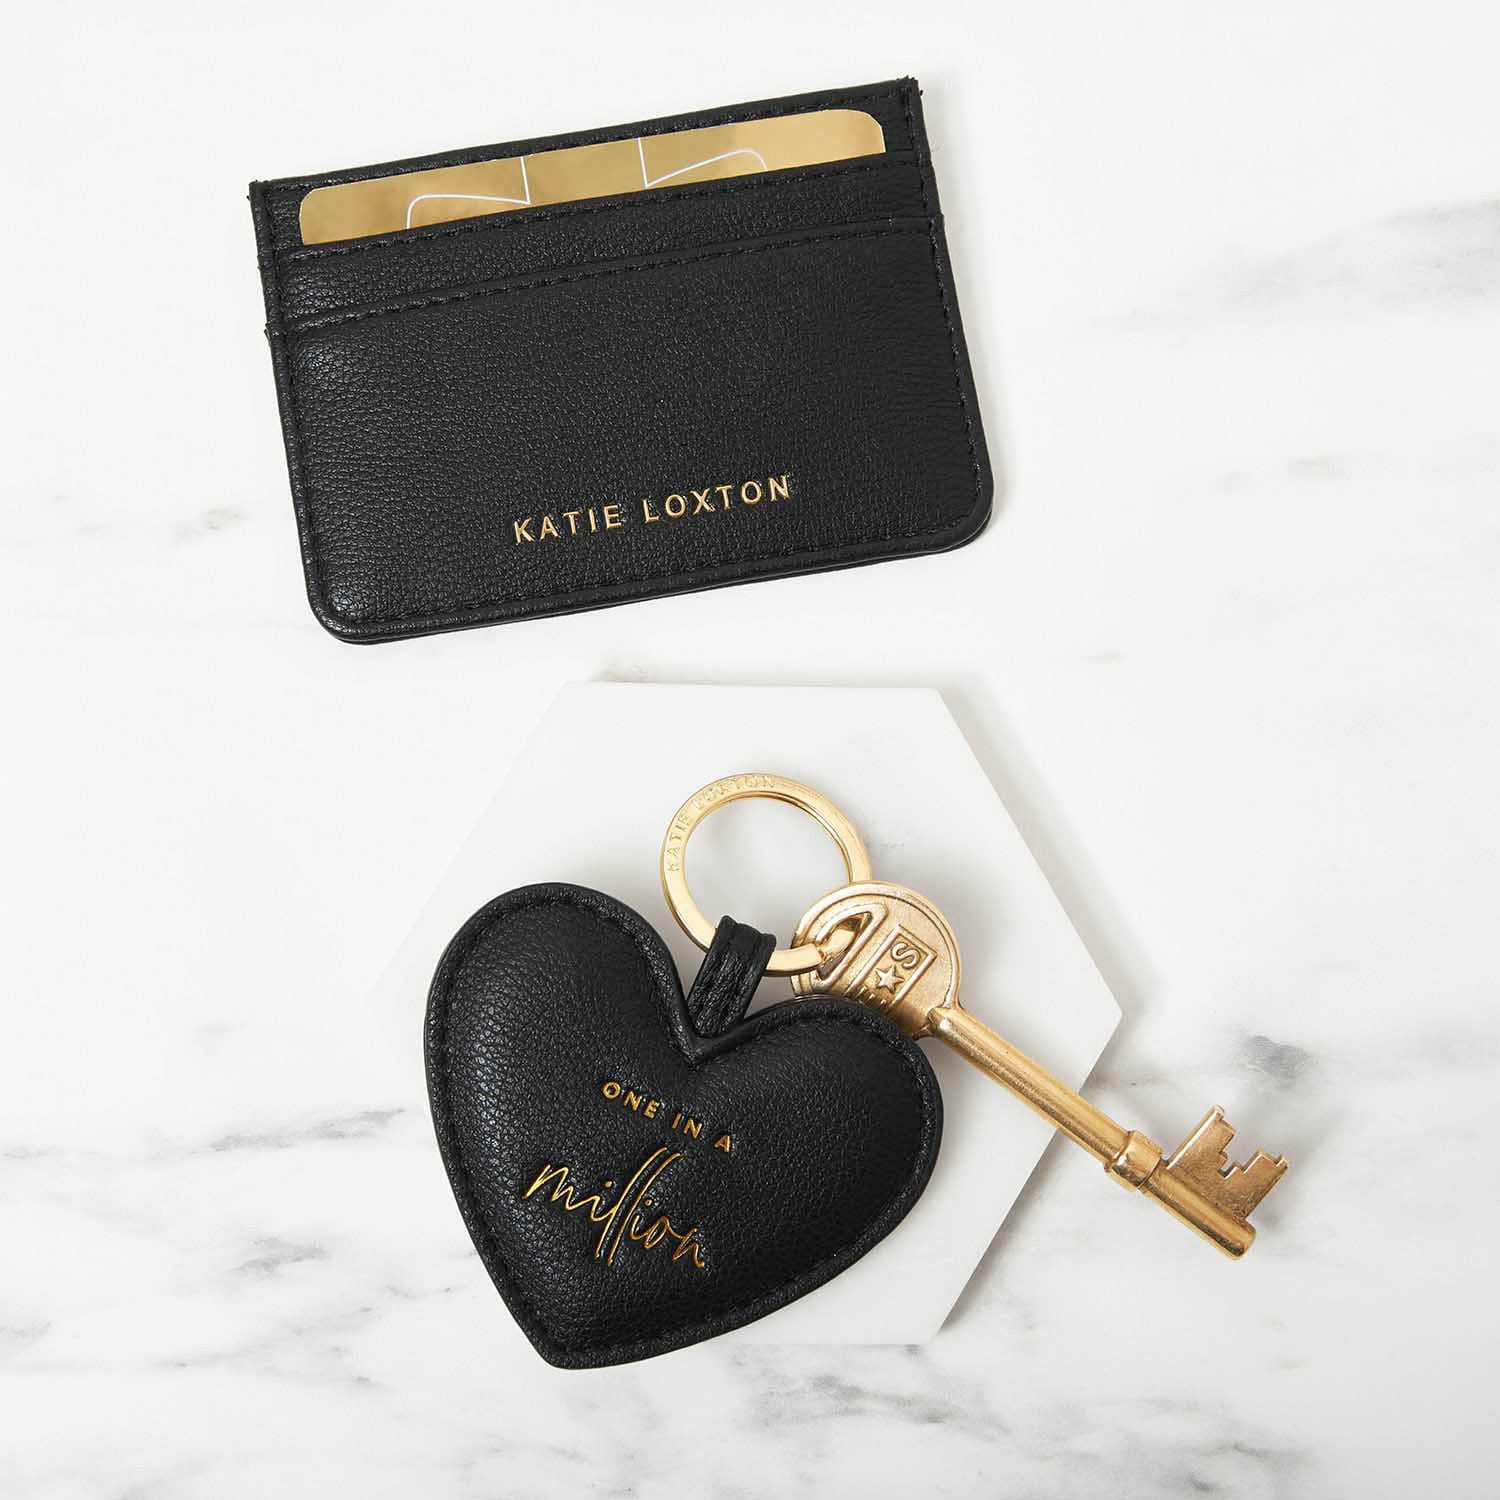 Katie Loxton Gift Set Katie Loxton Heart Keyring & Card Holder Set - One in a Million - Black